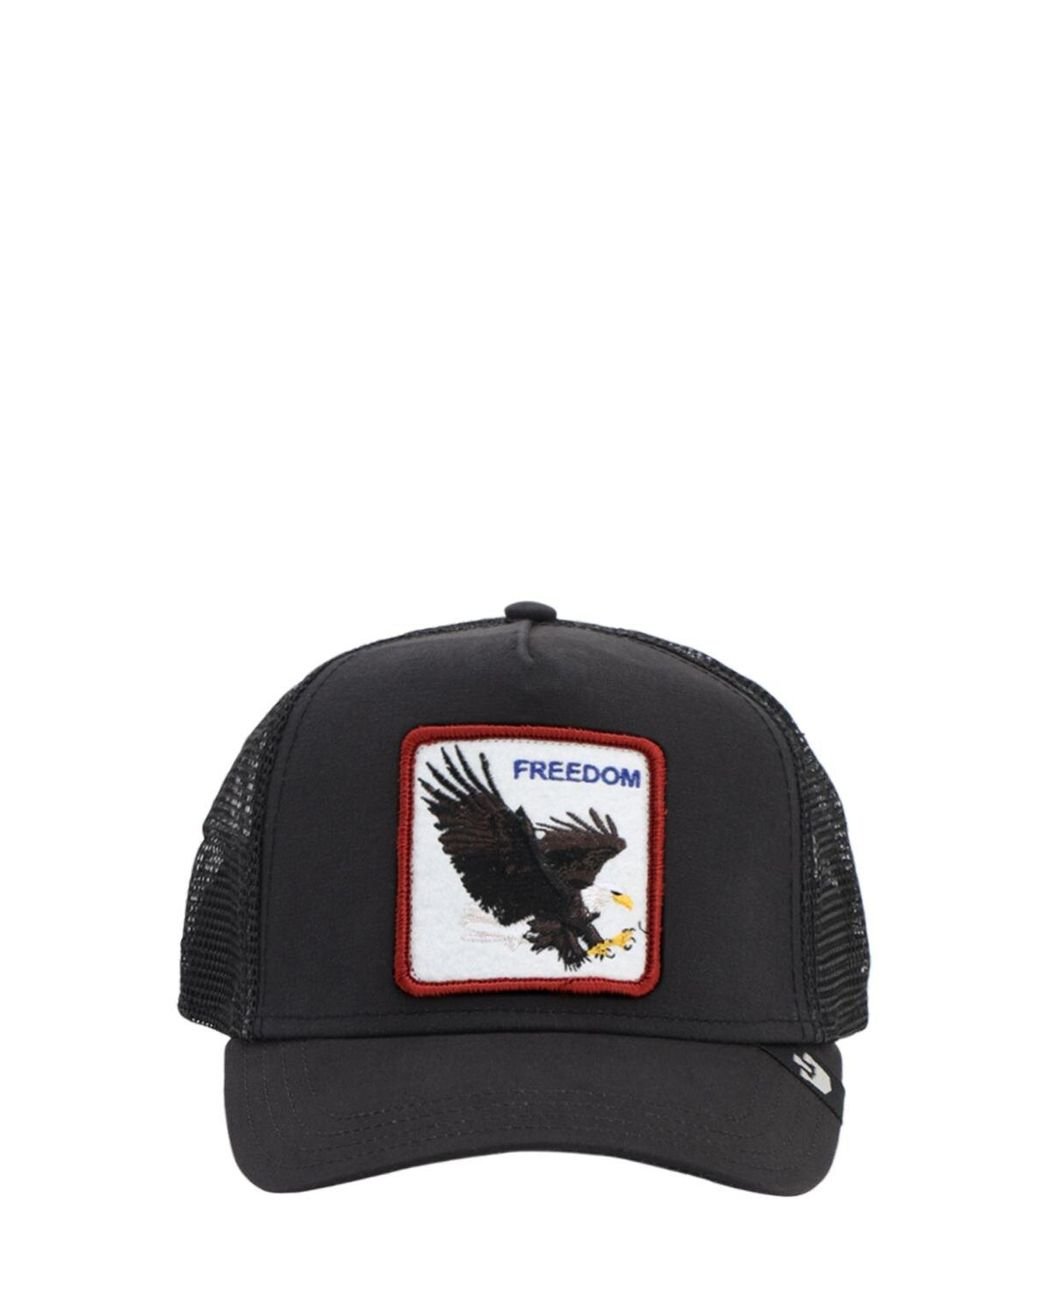 Goorin Bros Snapback Mesh Cap Black Freedom Eagle Patriotic Trucker Hat 101-0209 